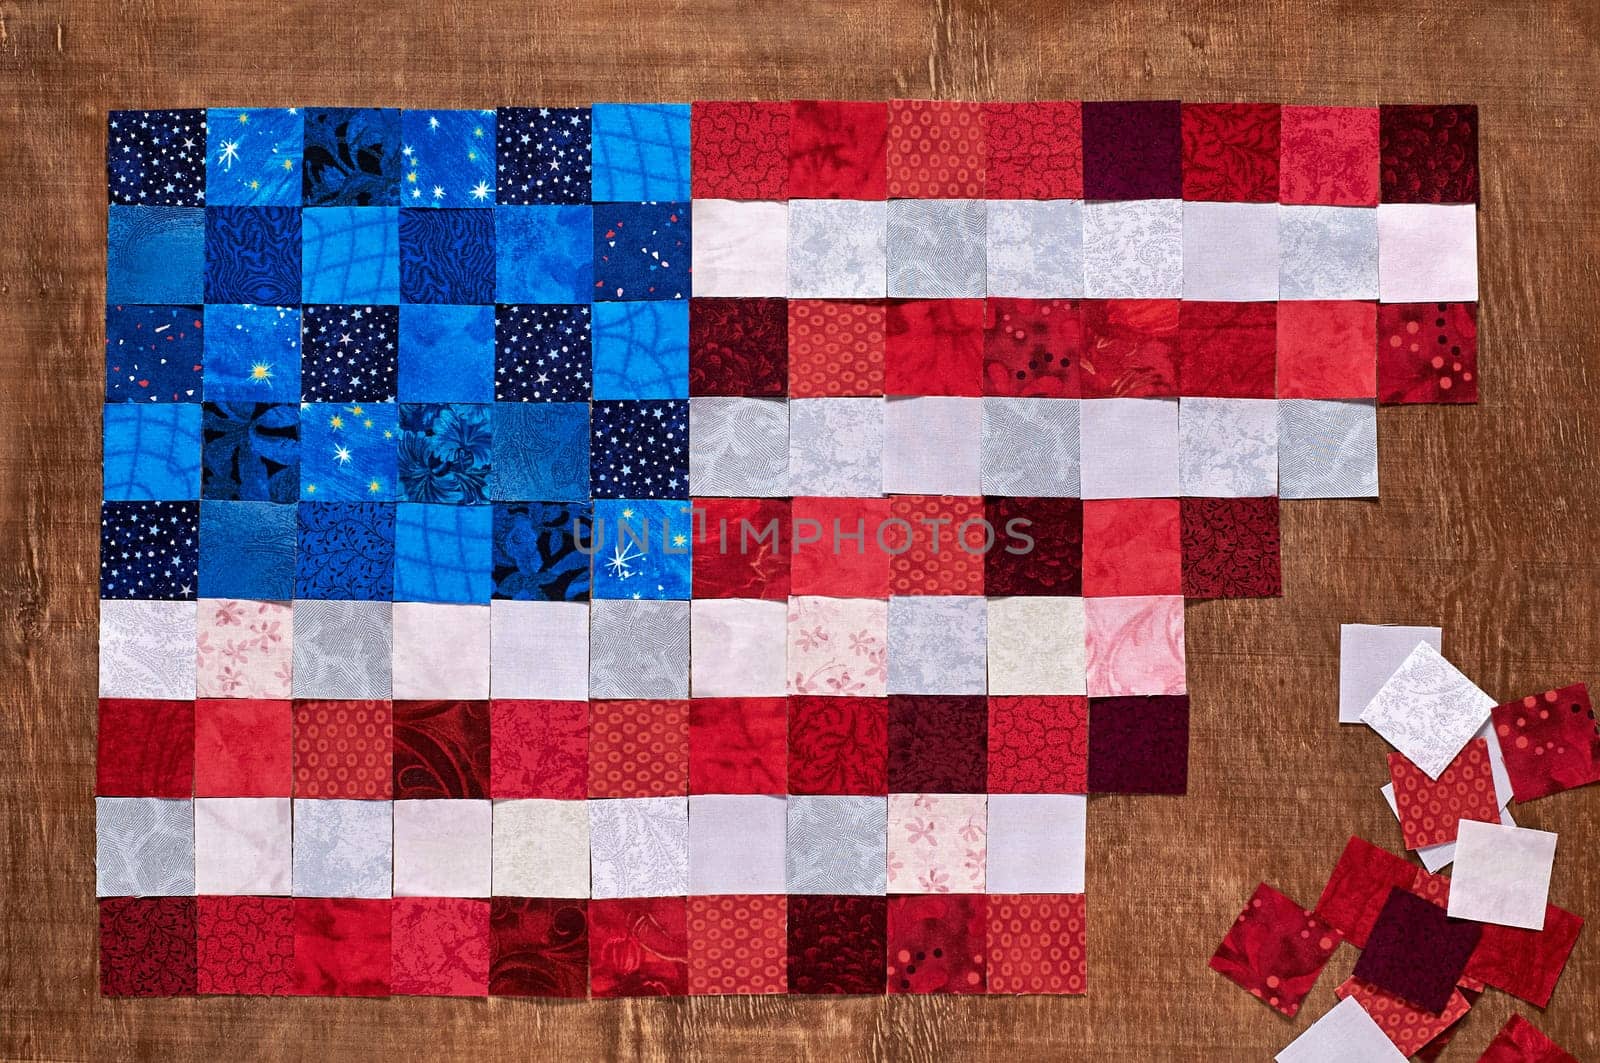 Square pieces of fabrics lying like a flag of USA